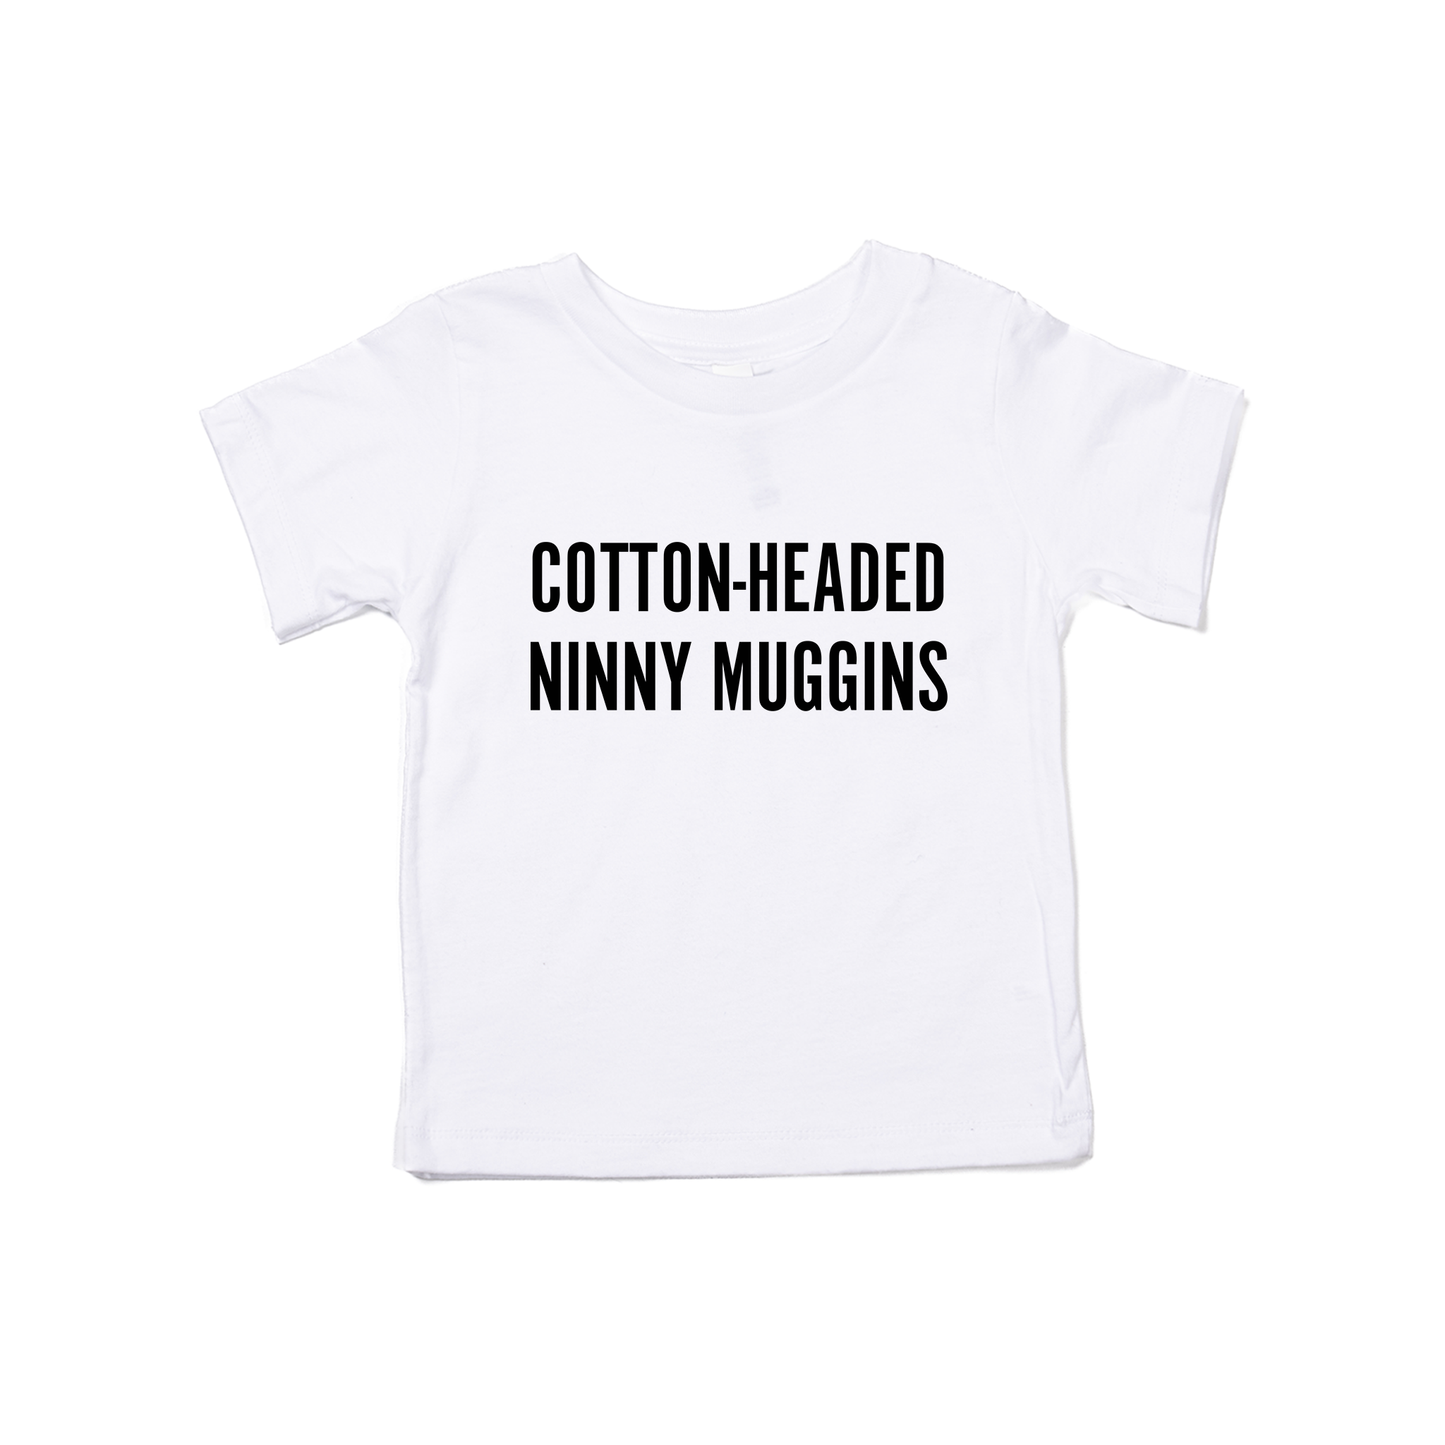 Cotton-Headed Ninny Muggins (Black) - Kids Tee (White)